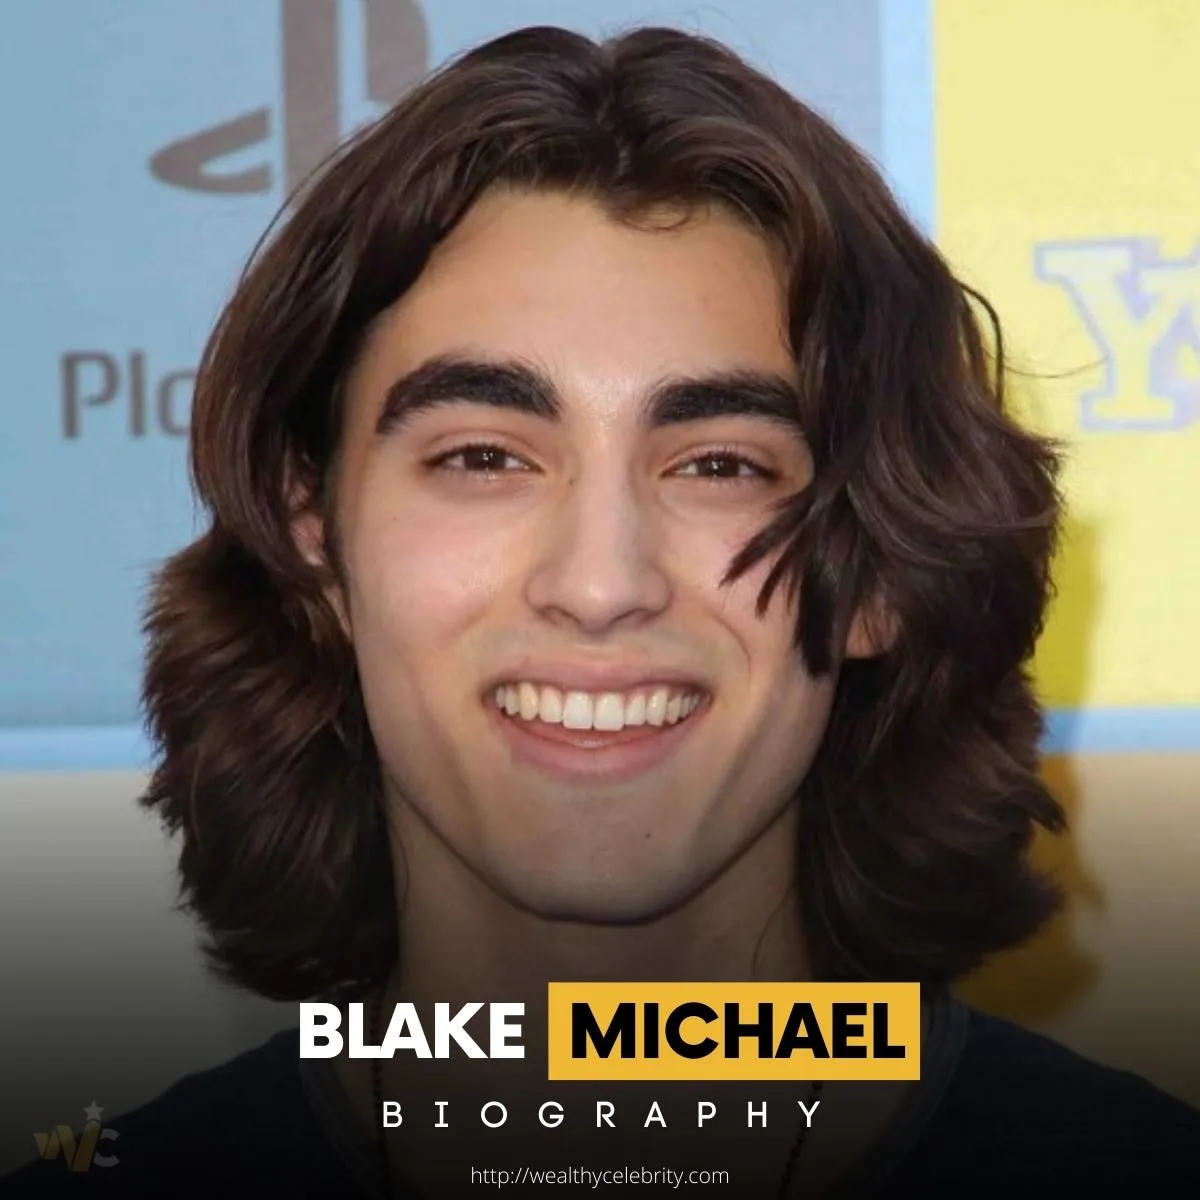 Blake Michael